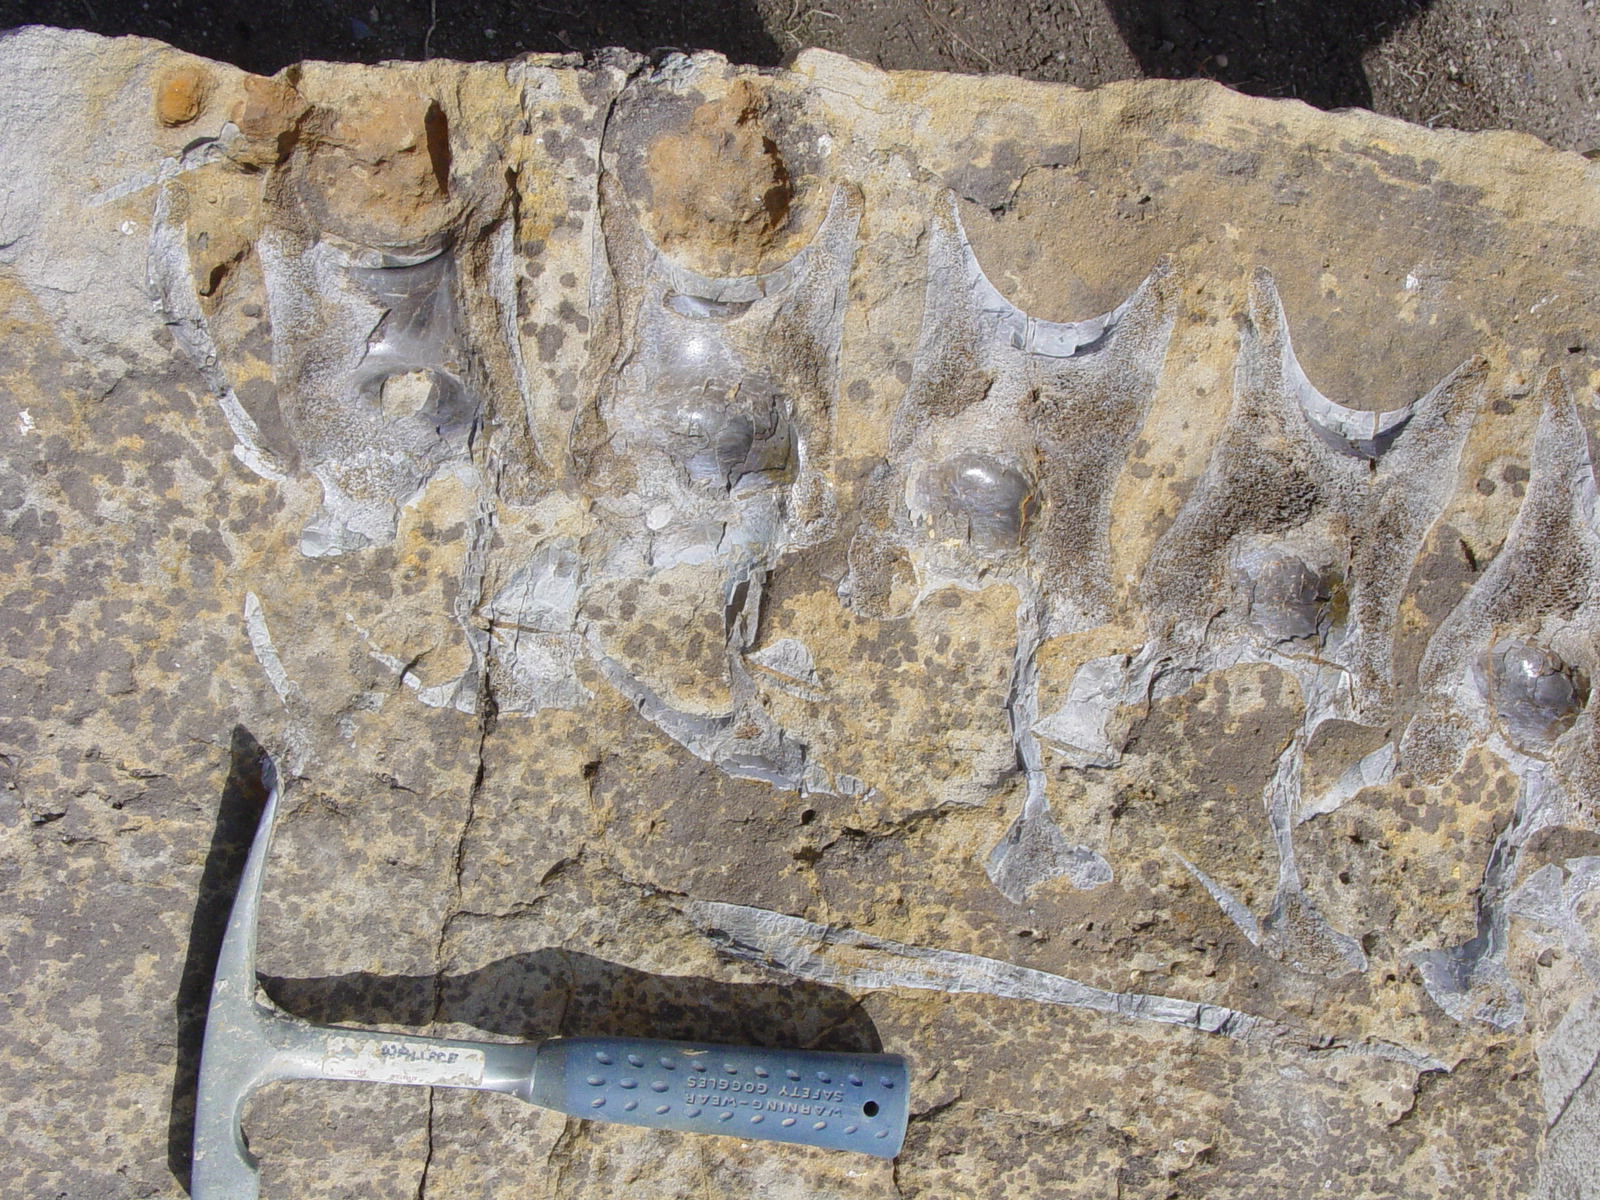 Allosaurus vertebrae at the Friends of Dinosaur Ridge Visitors’ Center detail image